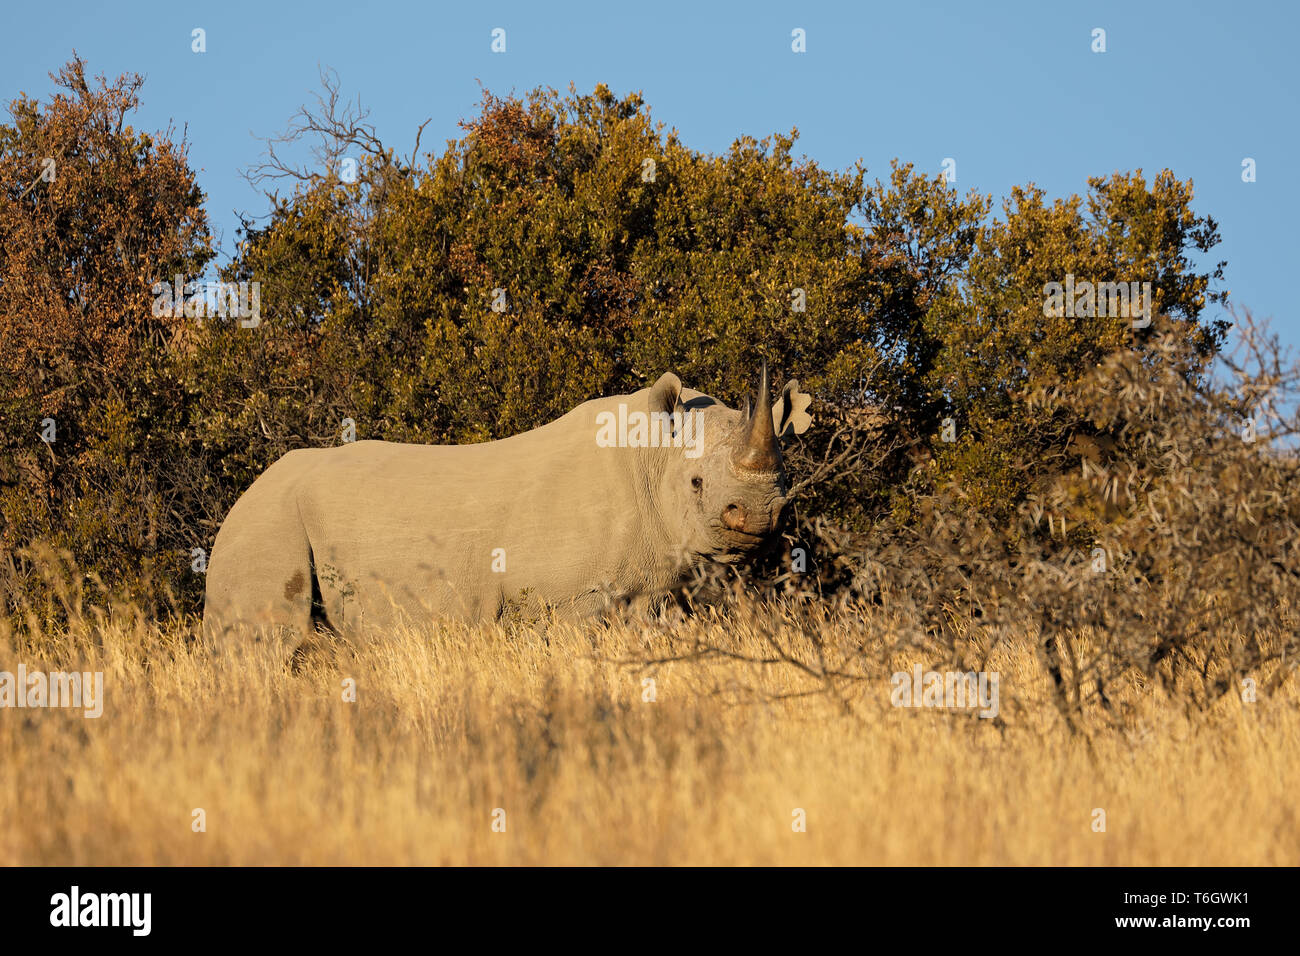 An endangered black rhinoceros (Diceros bicornis) in natural habitat, South Africa Stock Photo